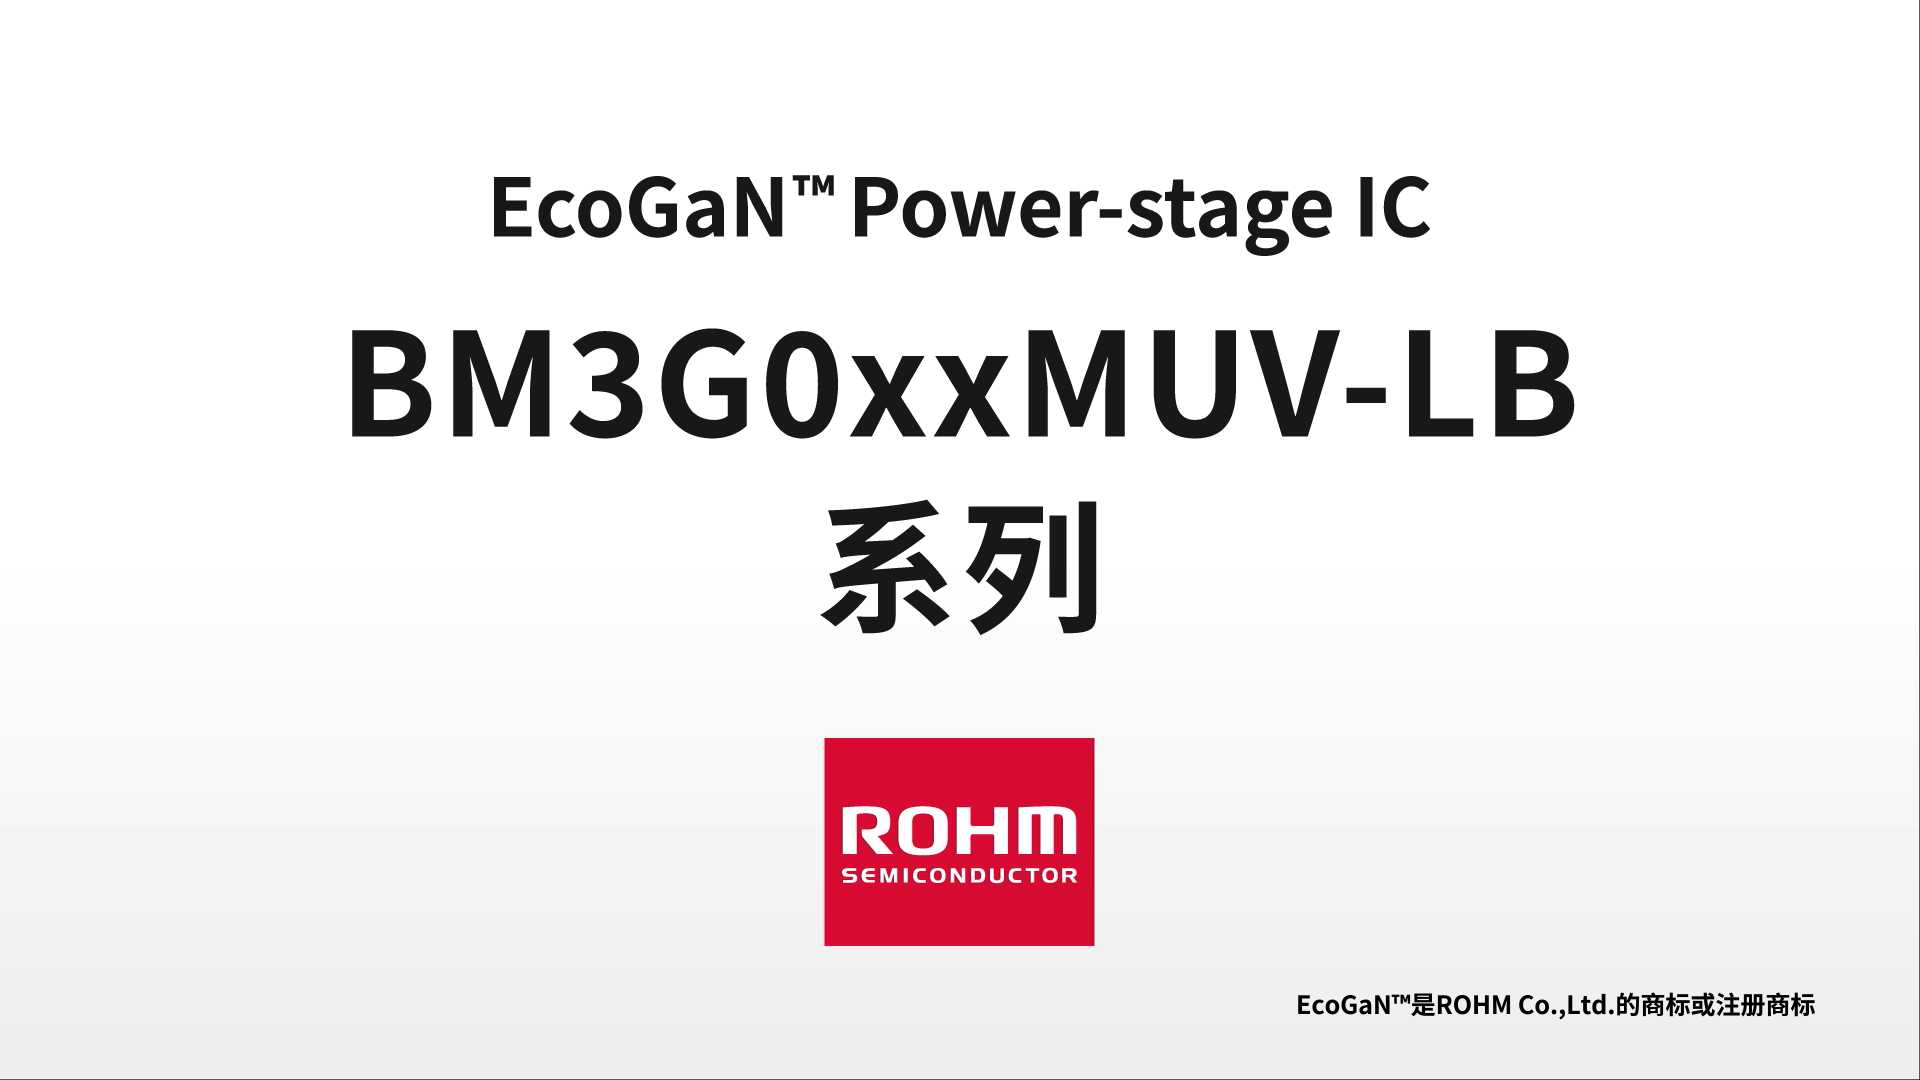 【新品介绍】EcoGaN™ Power-stage lC BM3GOxxMUV-LB 系列